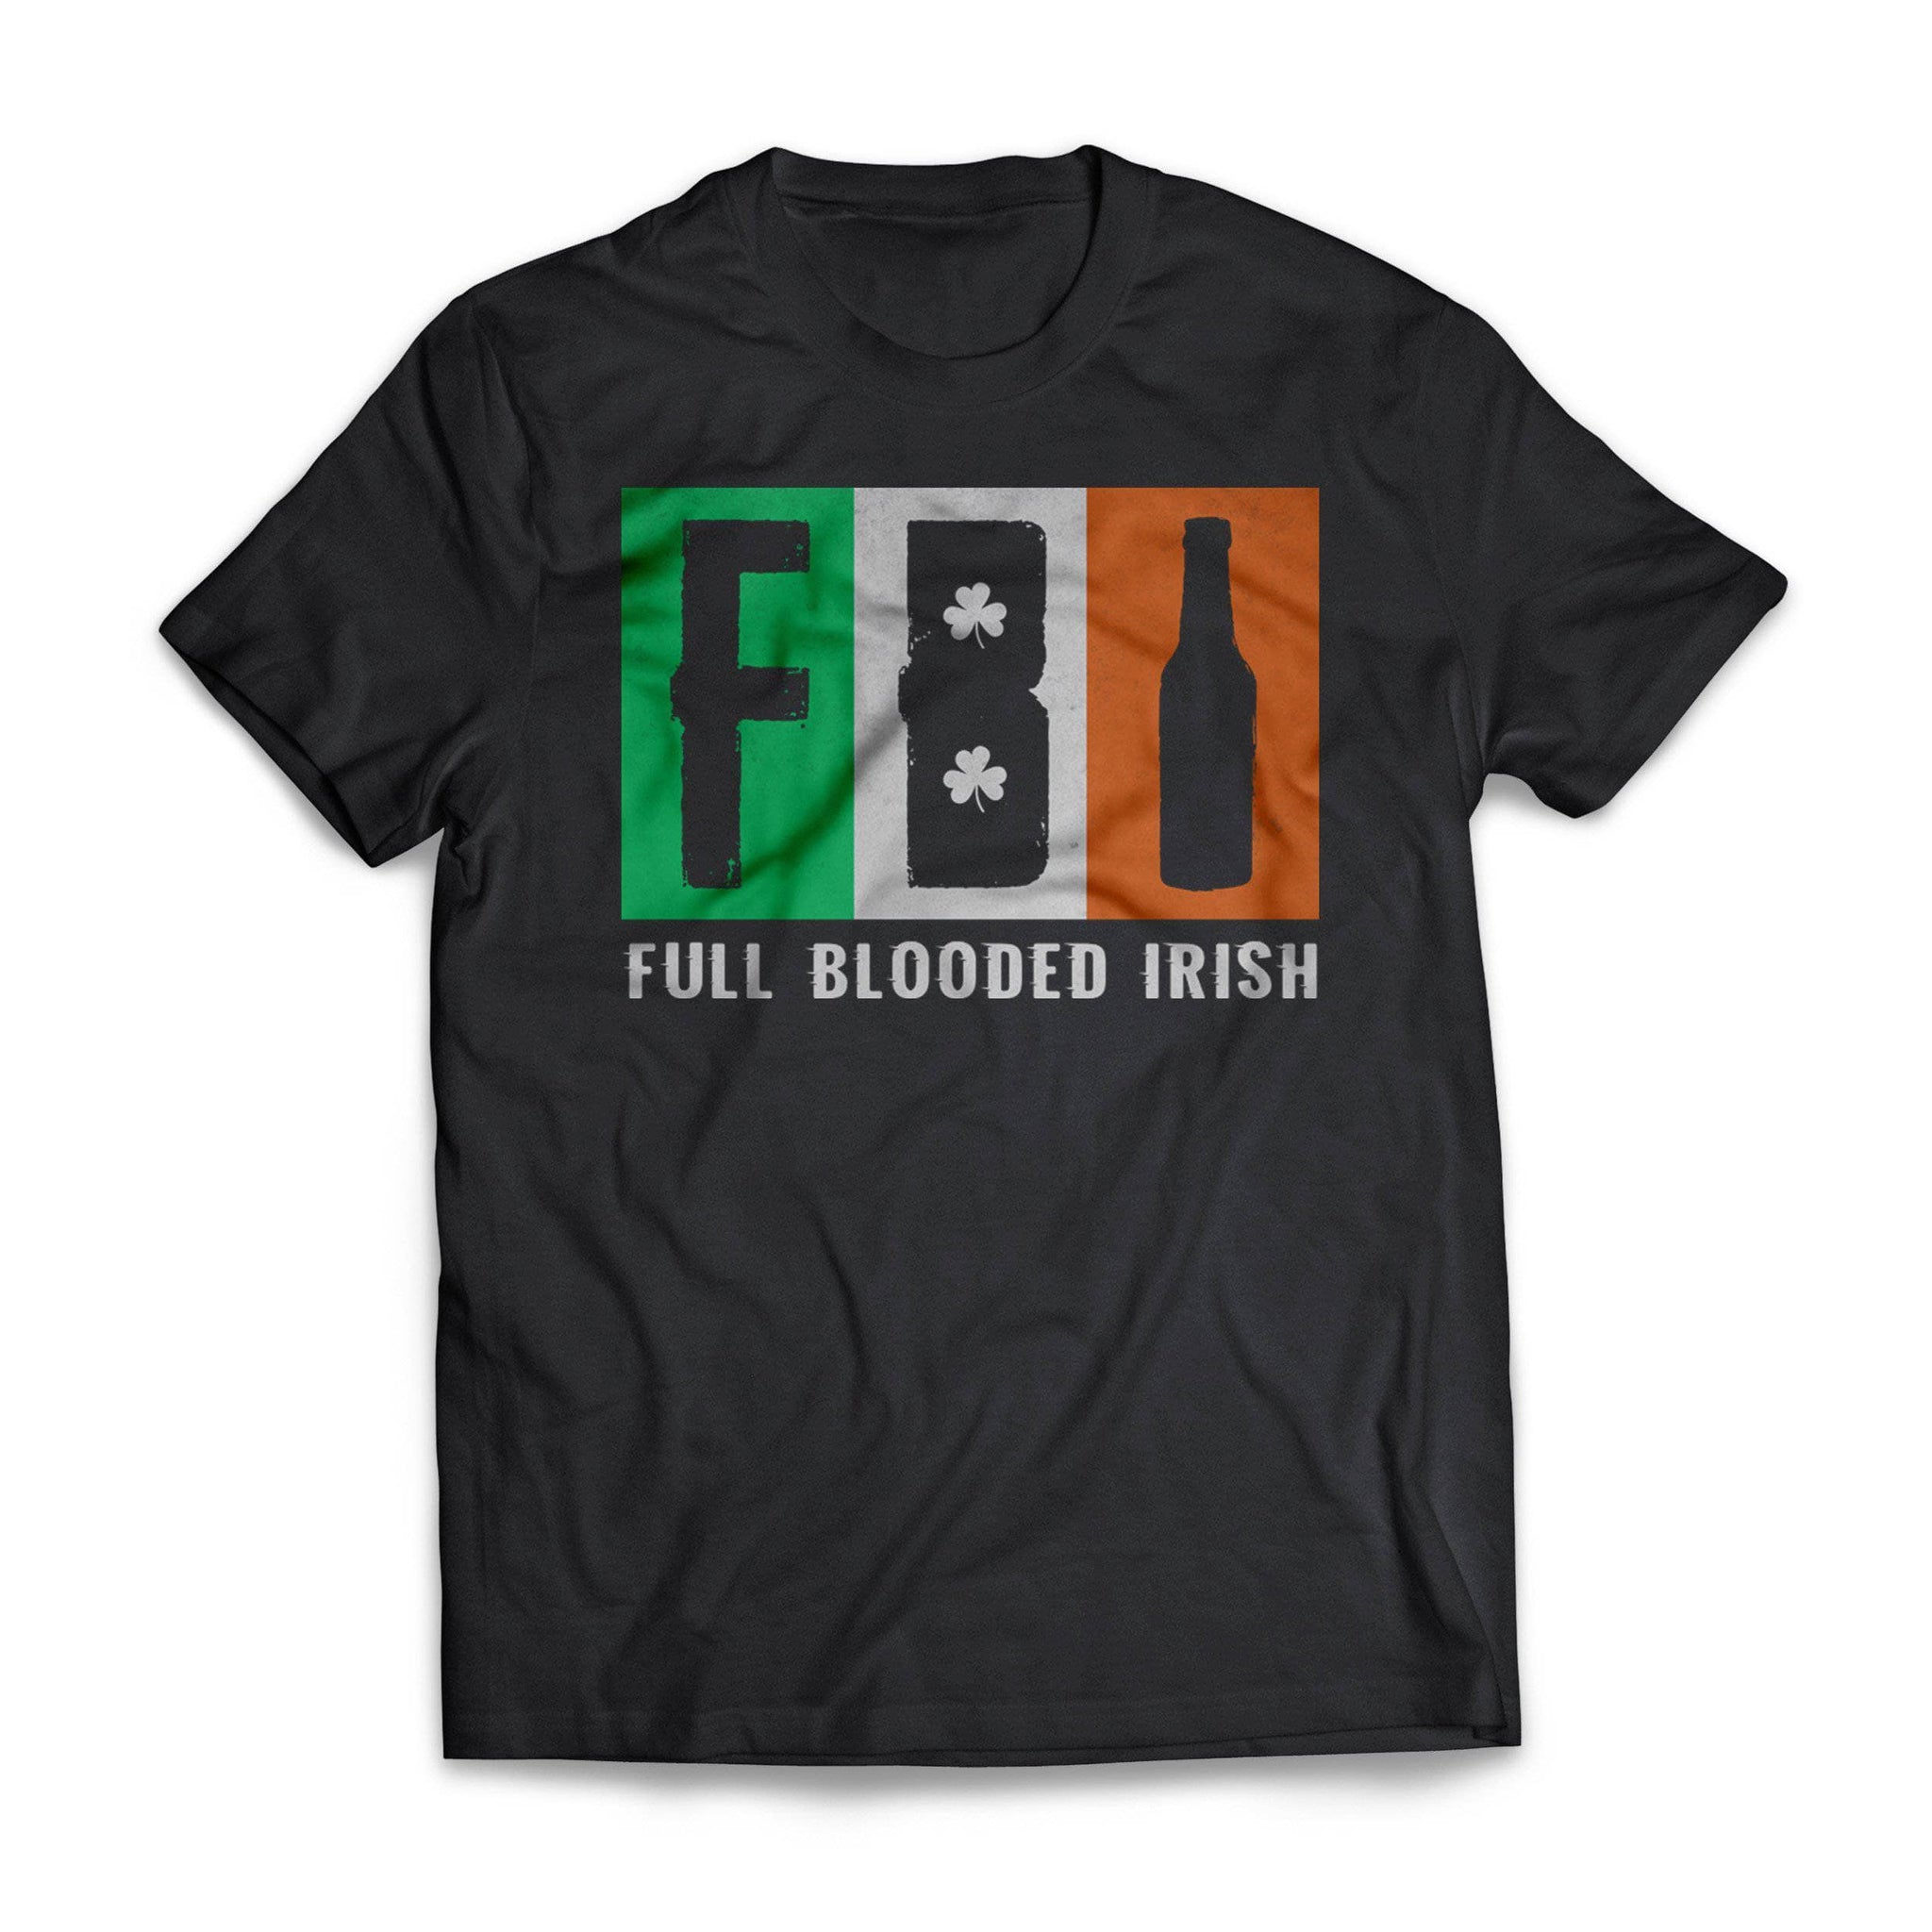 Full Blooded Irish